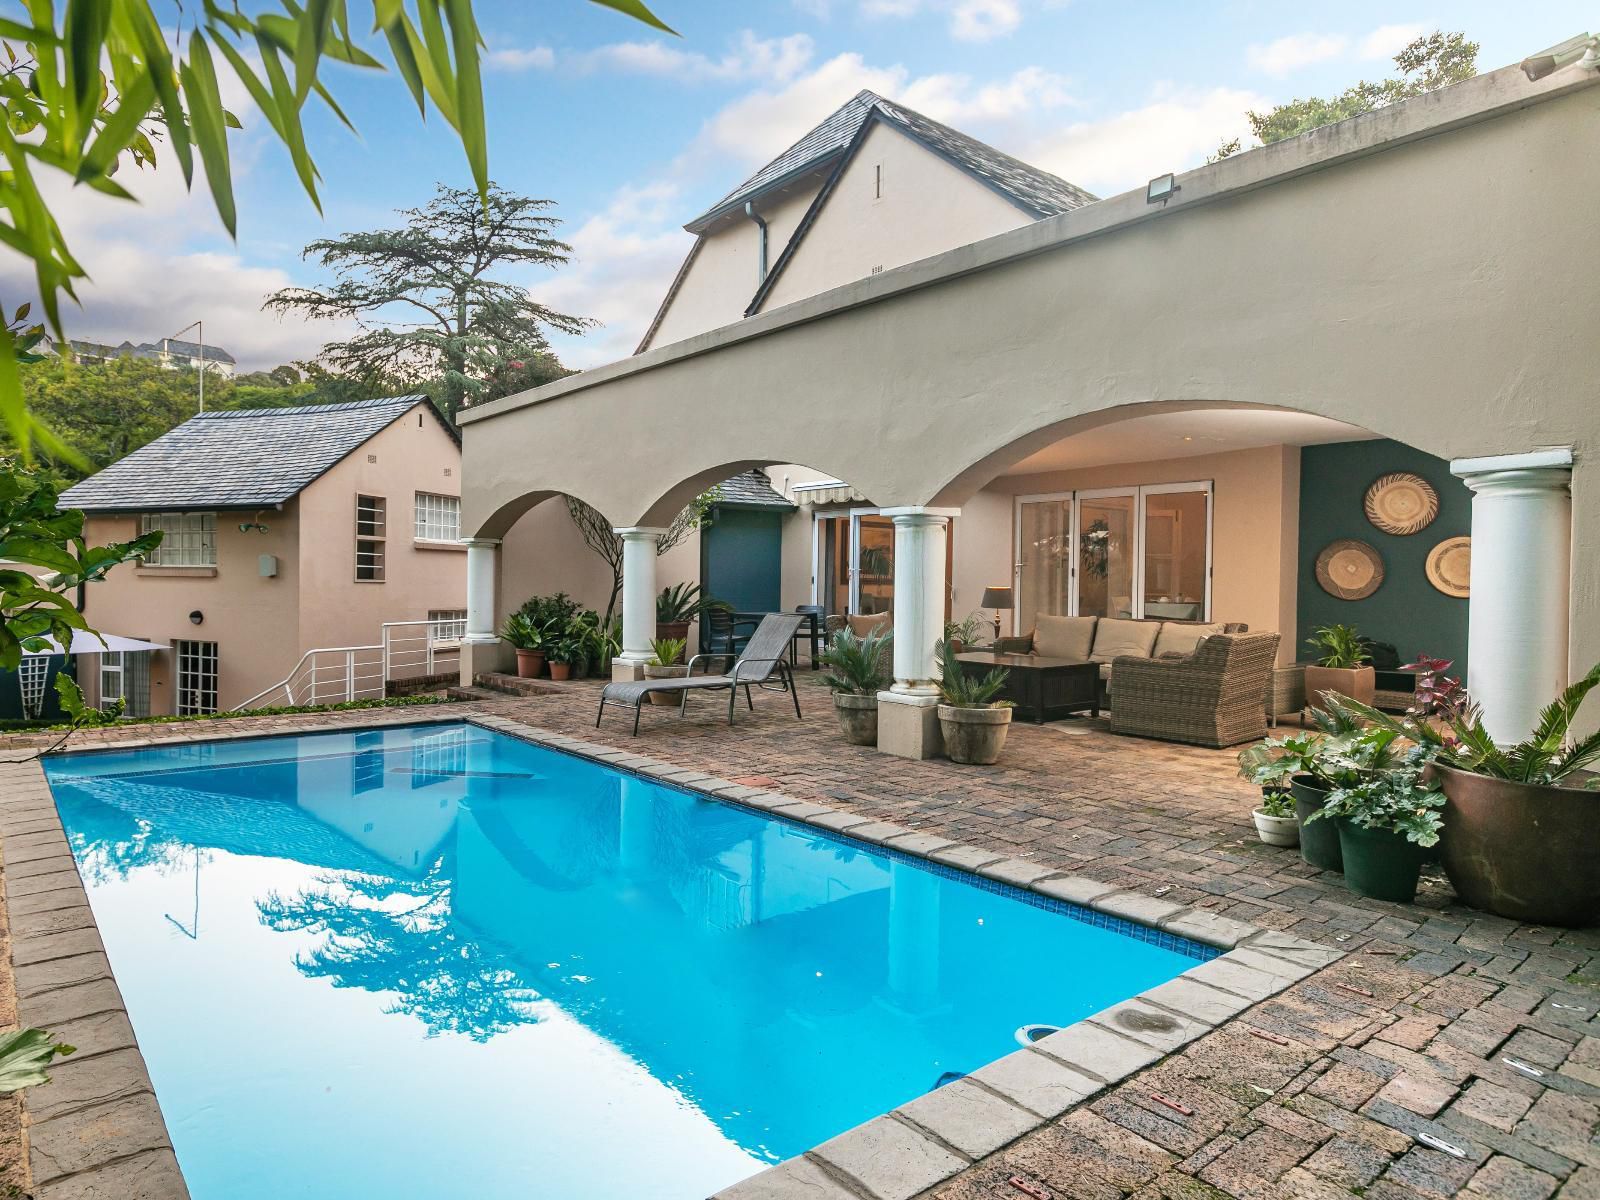 Emmarentia Guest House Melville Johannesburg Gauteng South Africa House, Building, Architecture, Garden, Nature, Plant, Swimming Pool